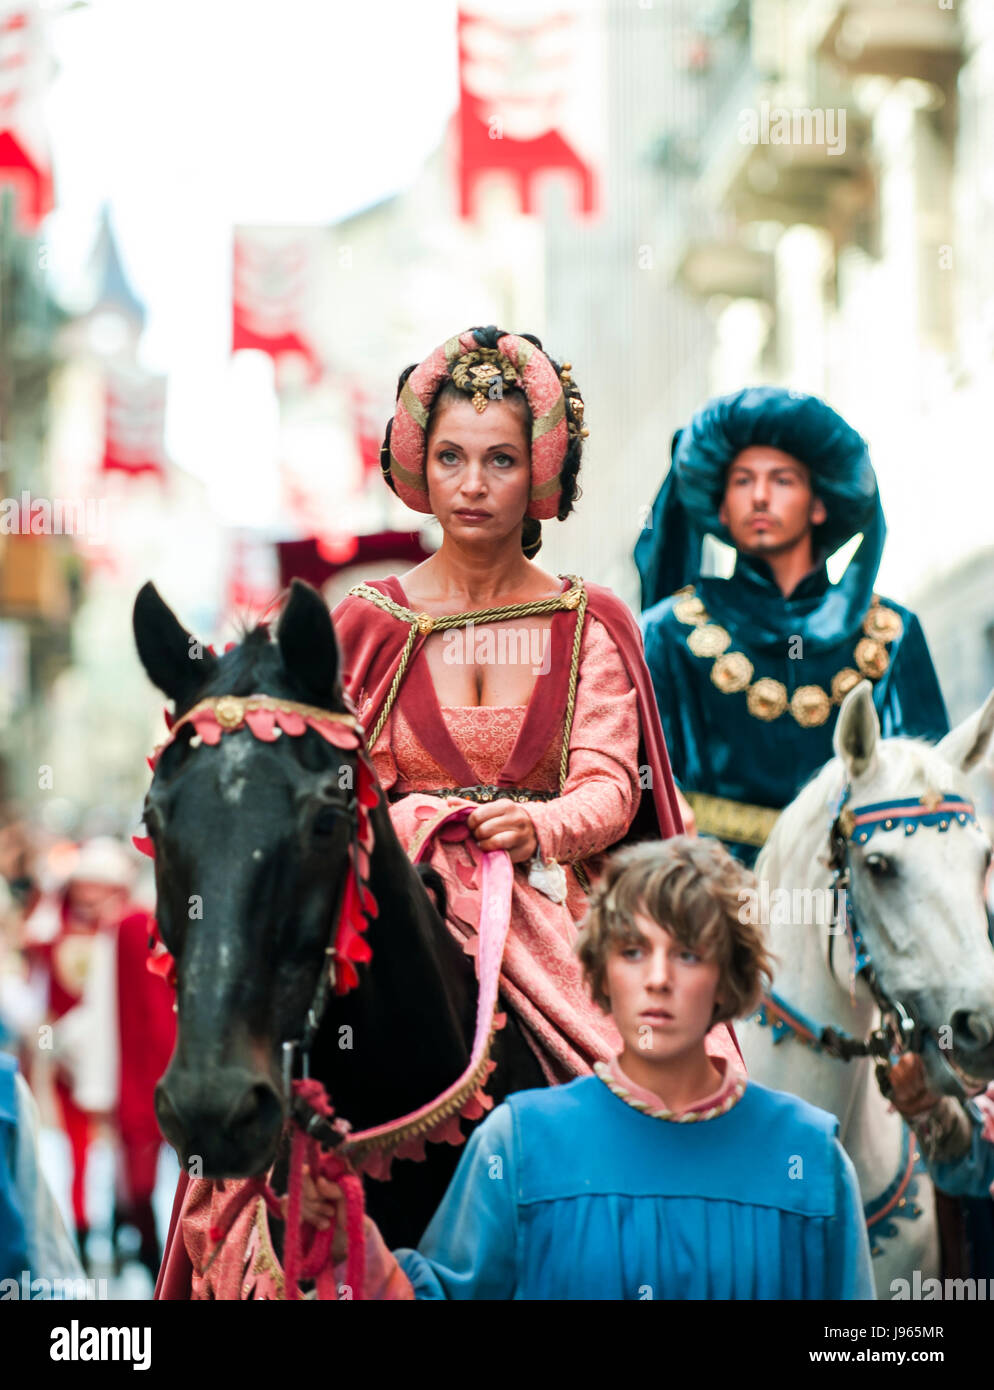 Lady on horseback of Middle Ages Stock Photo